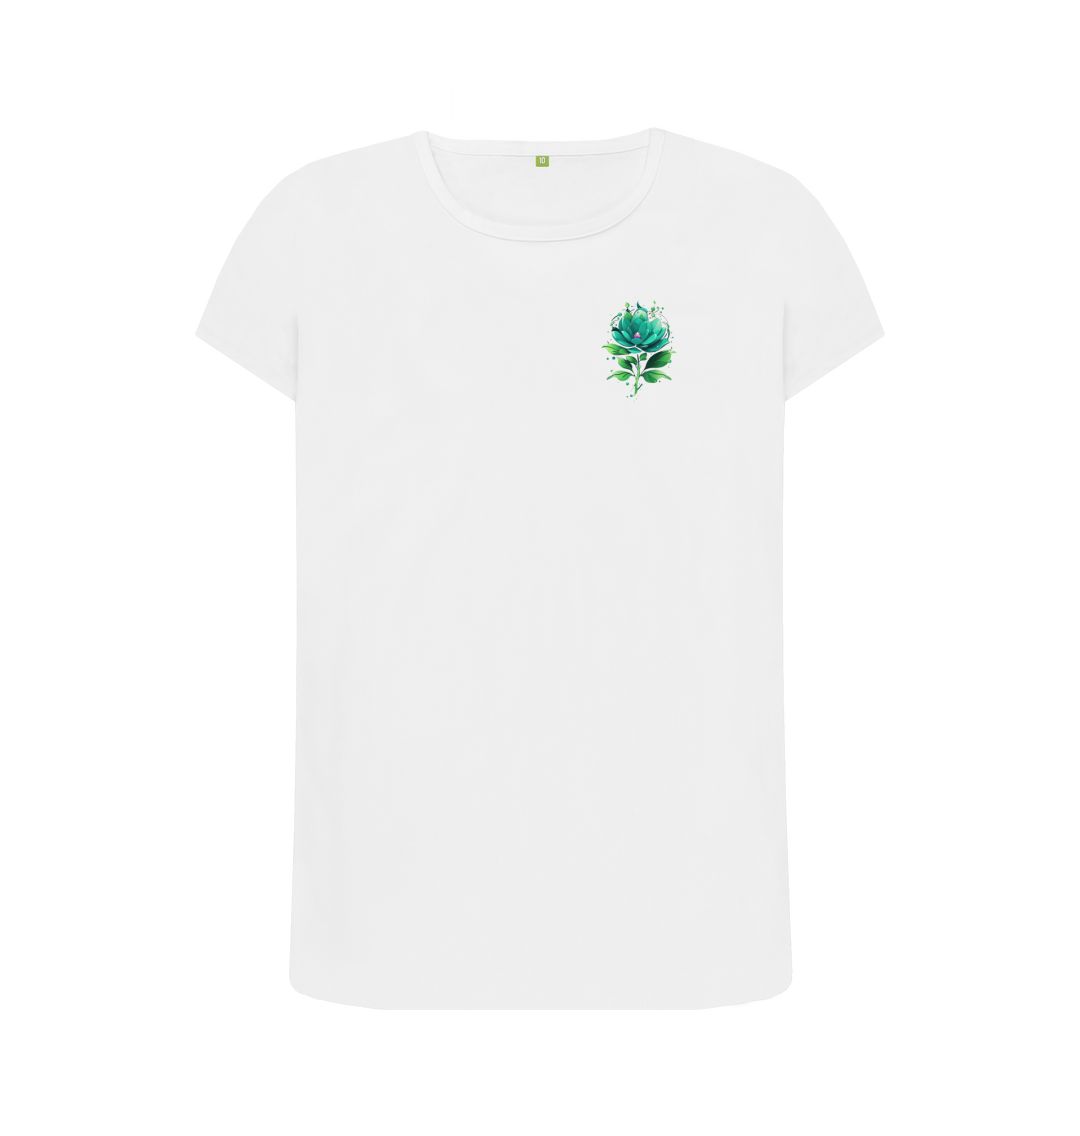 Women's green jade flower design crew neck organic cotton t-shirt - Premium Eco Chic Printed T-shirt from Eco Threadz - Just £20! Shop now at Eco Threadz